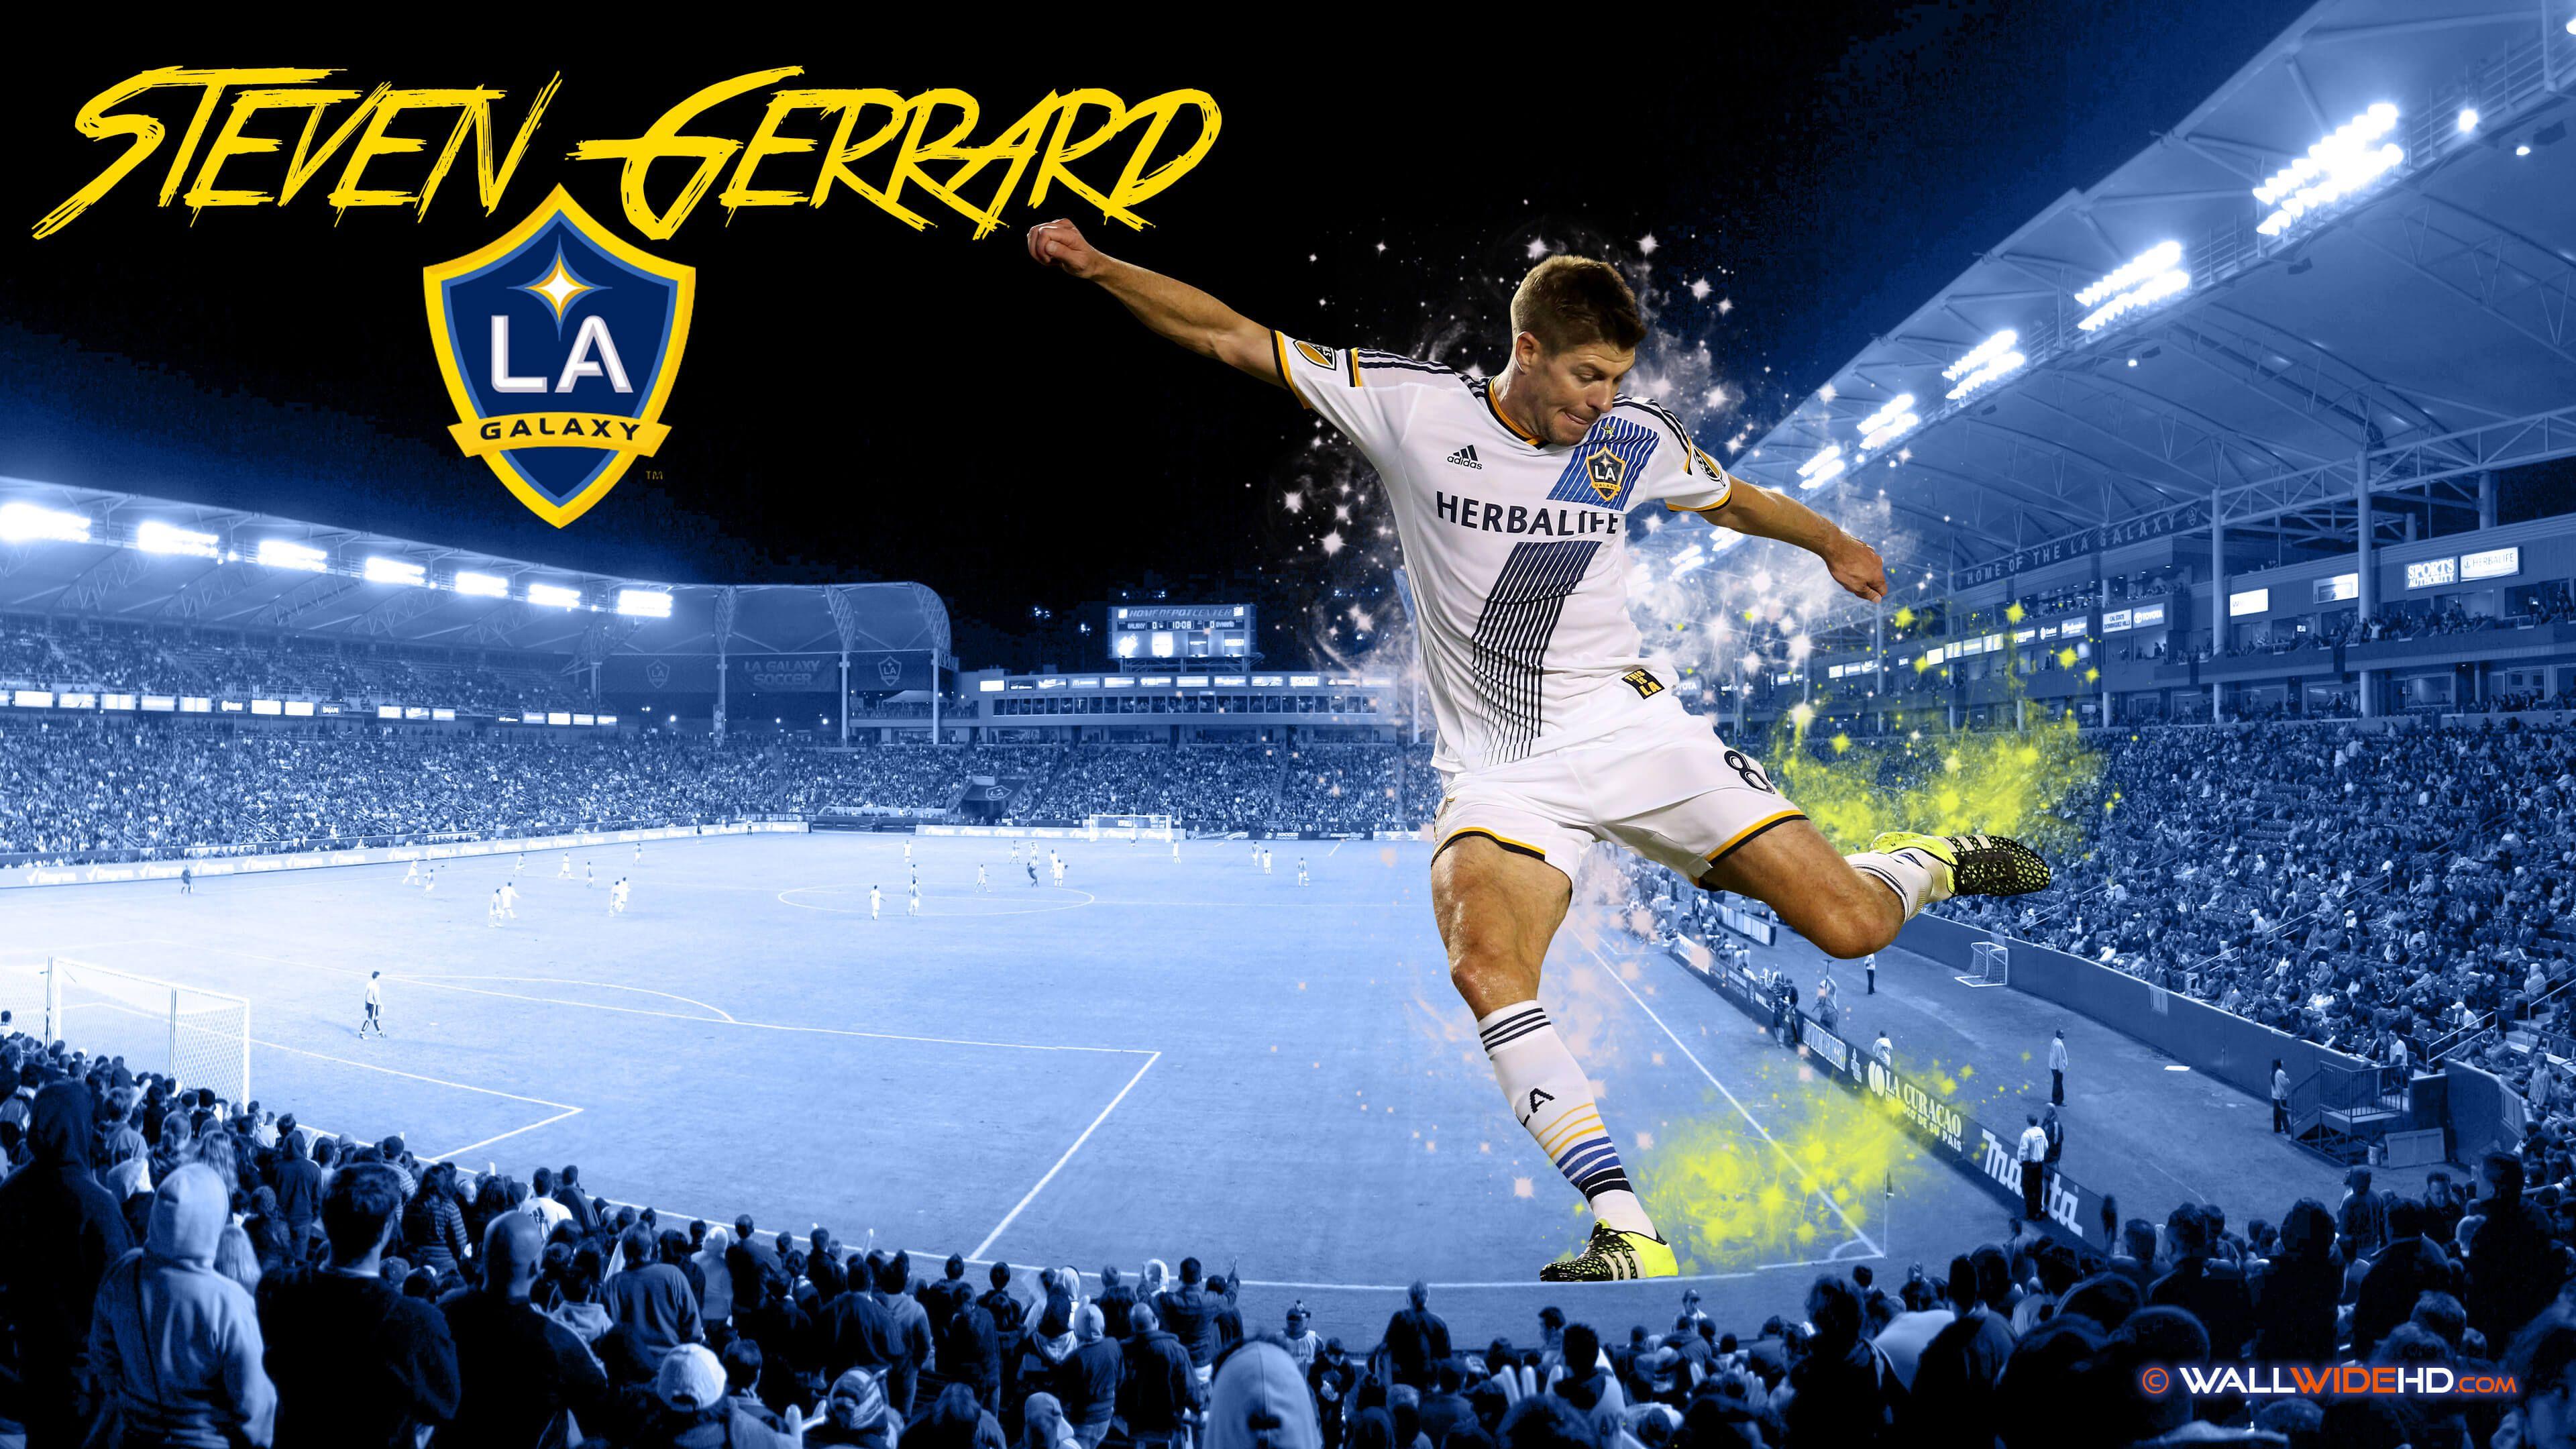 Steven Gerrard 2015 MLS LA Galaxy wallpaper